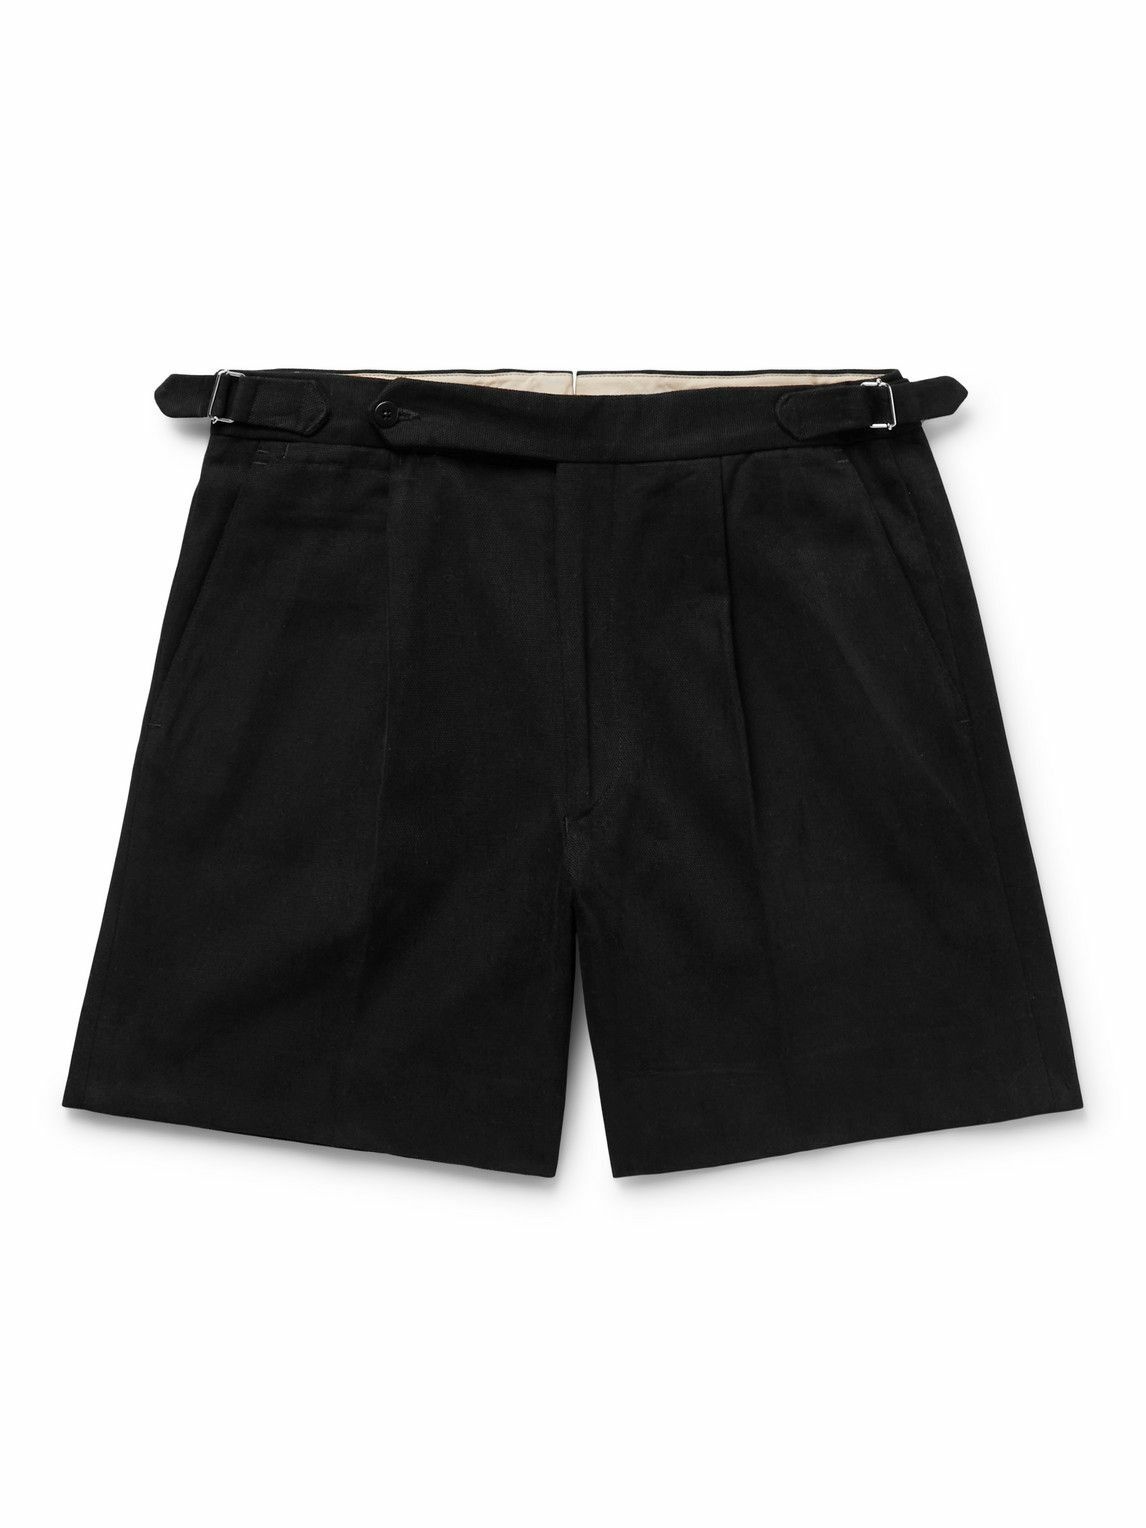 Stòffa - Straight-Leg Pleated Cotton Shorts - Black STÒFFA